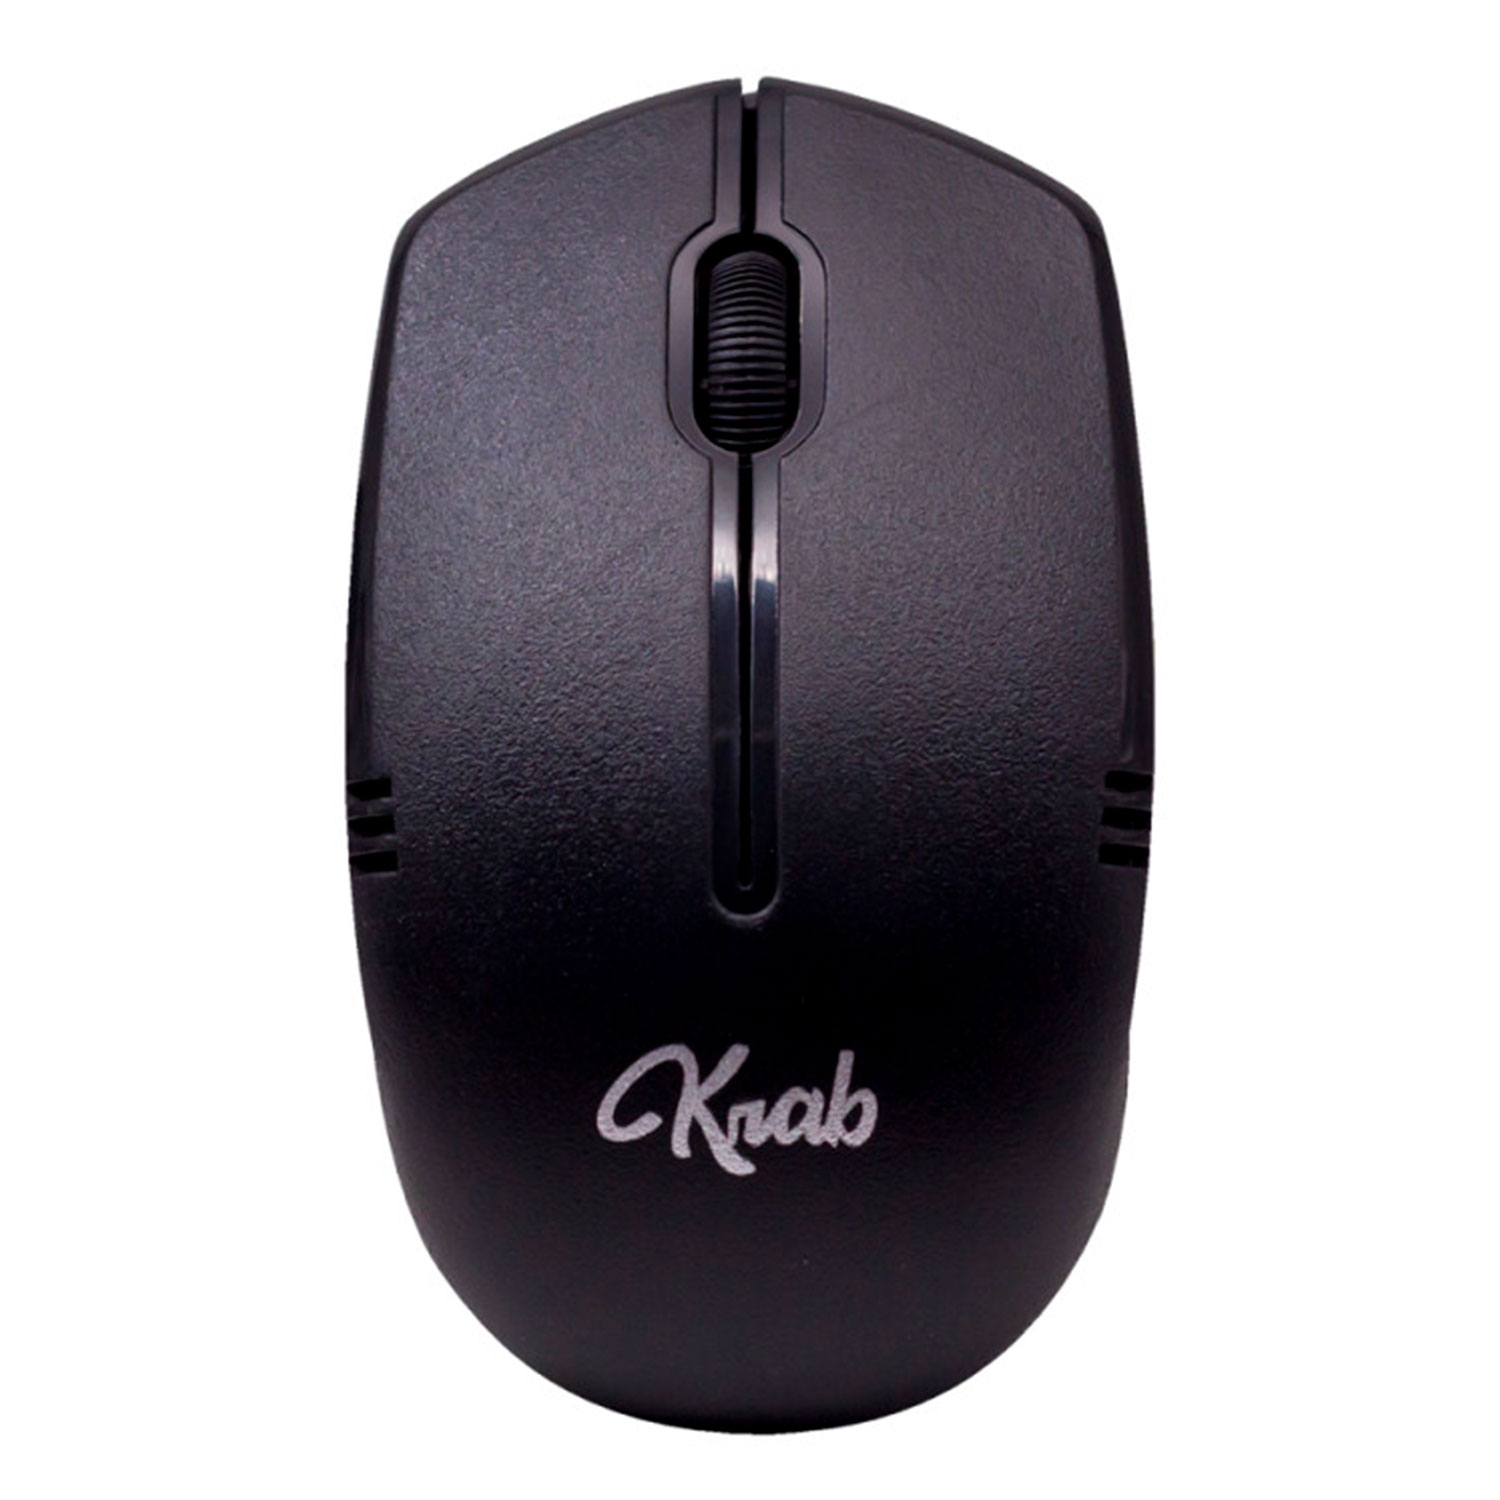 Kit Teclado e Mouse Quanta Krab KBKTM10 Wireless Português - Preto